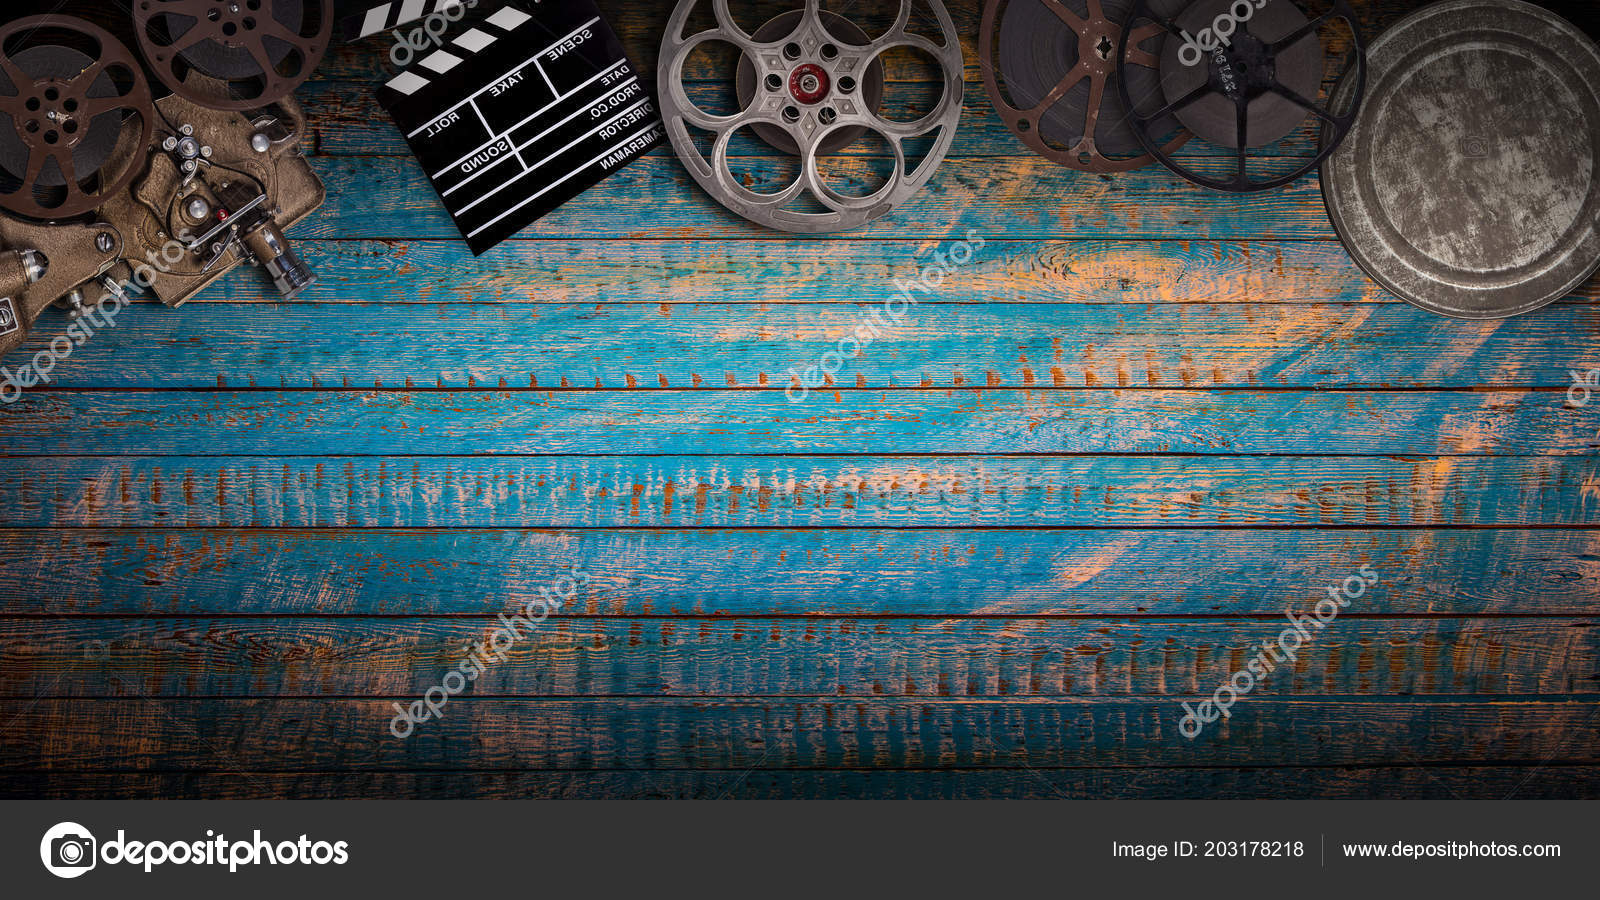 Cinema concept of vintage film reels, clapperboard and projector